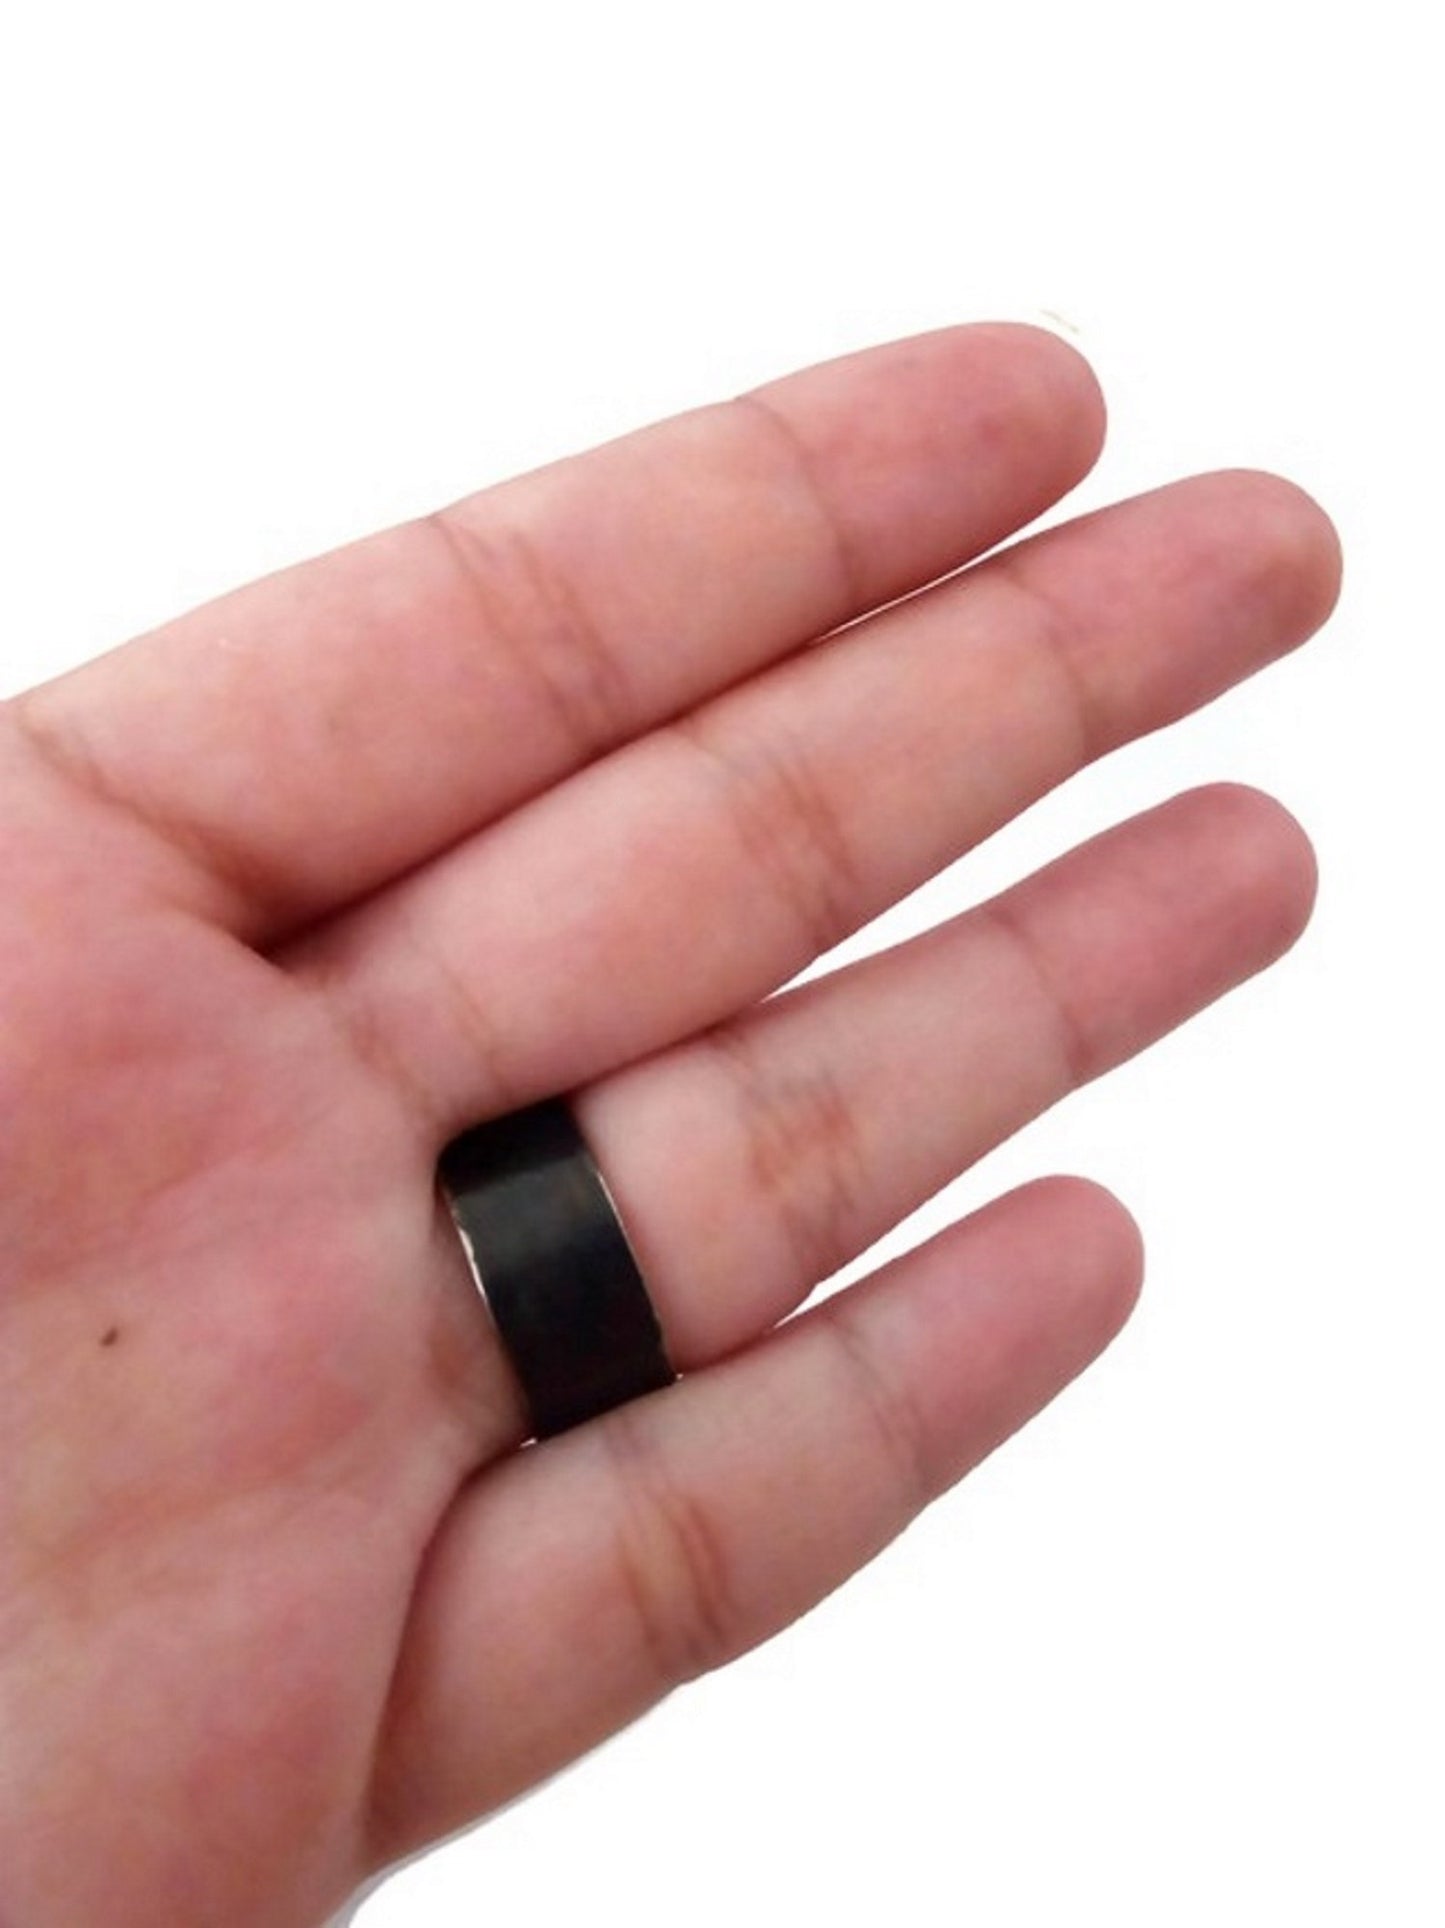 Oxidized Silver Band Ring Size 9, Unisex Black Ring